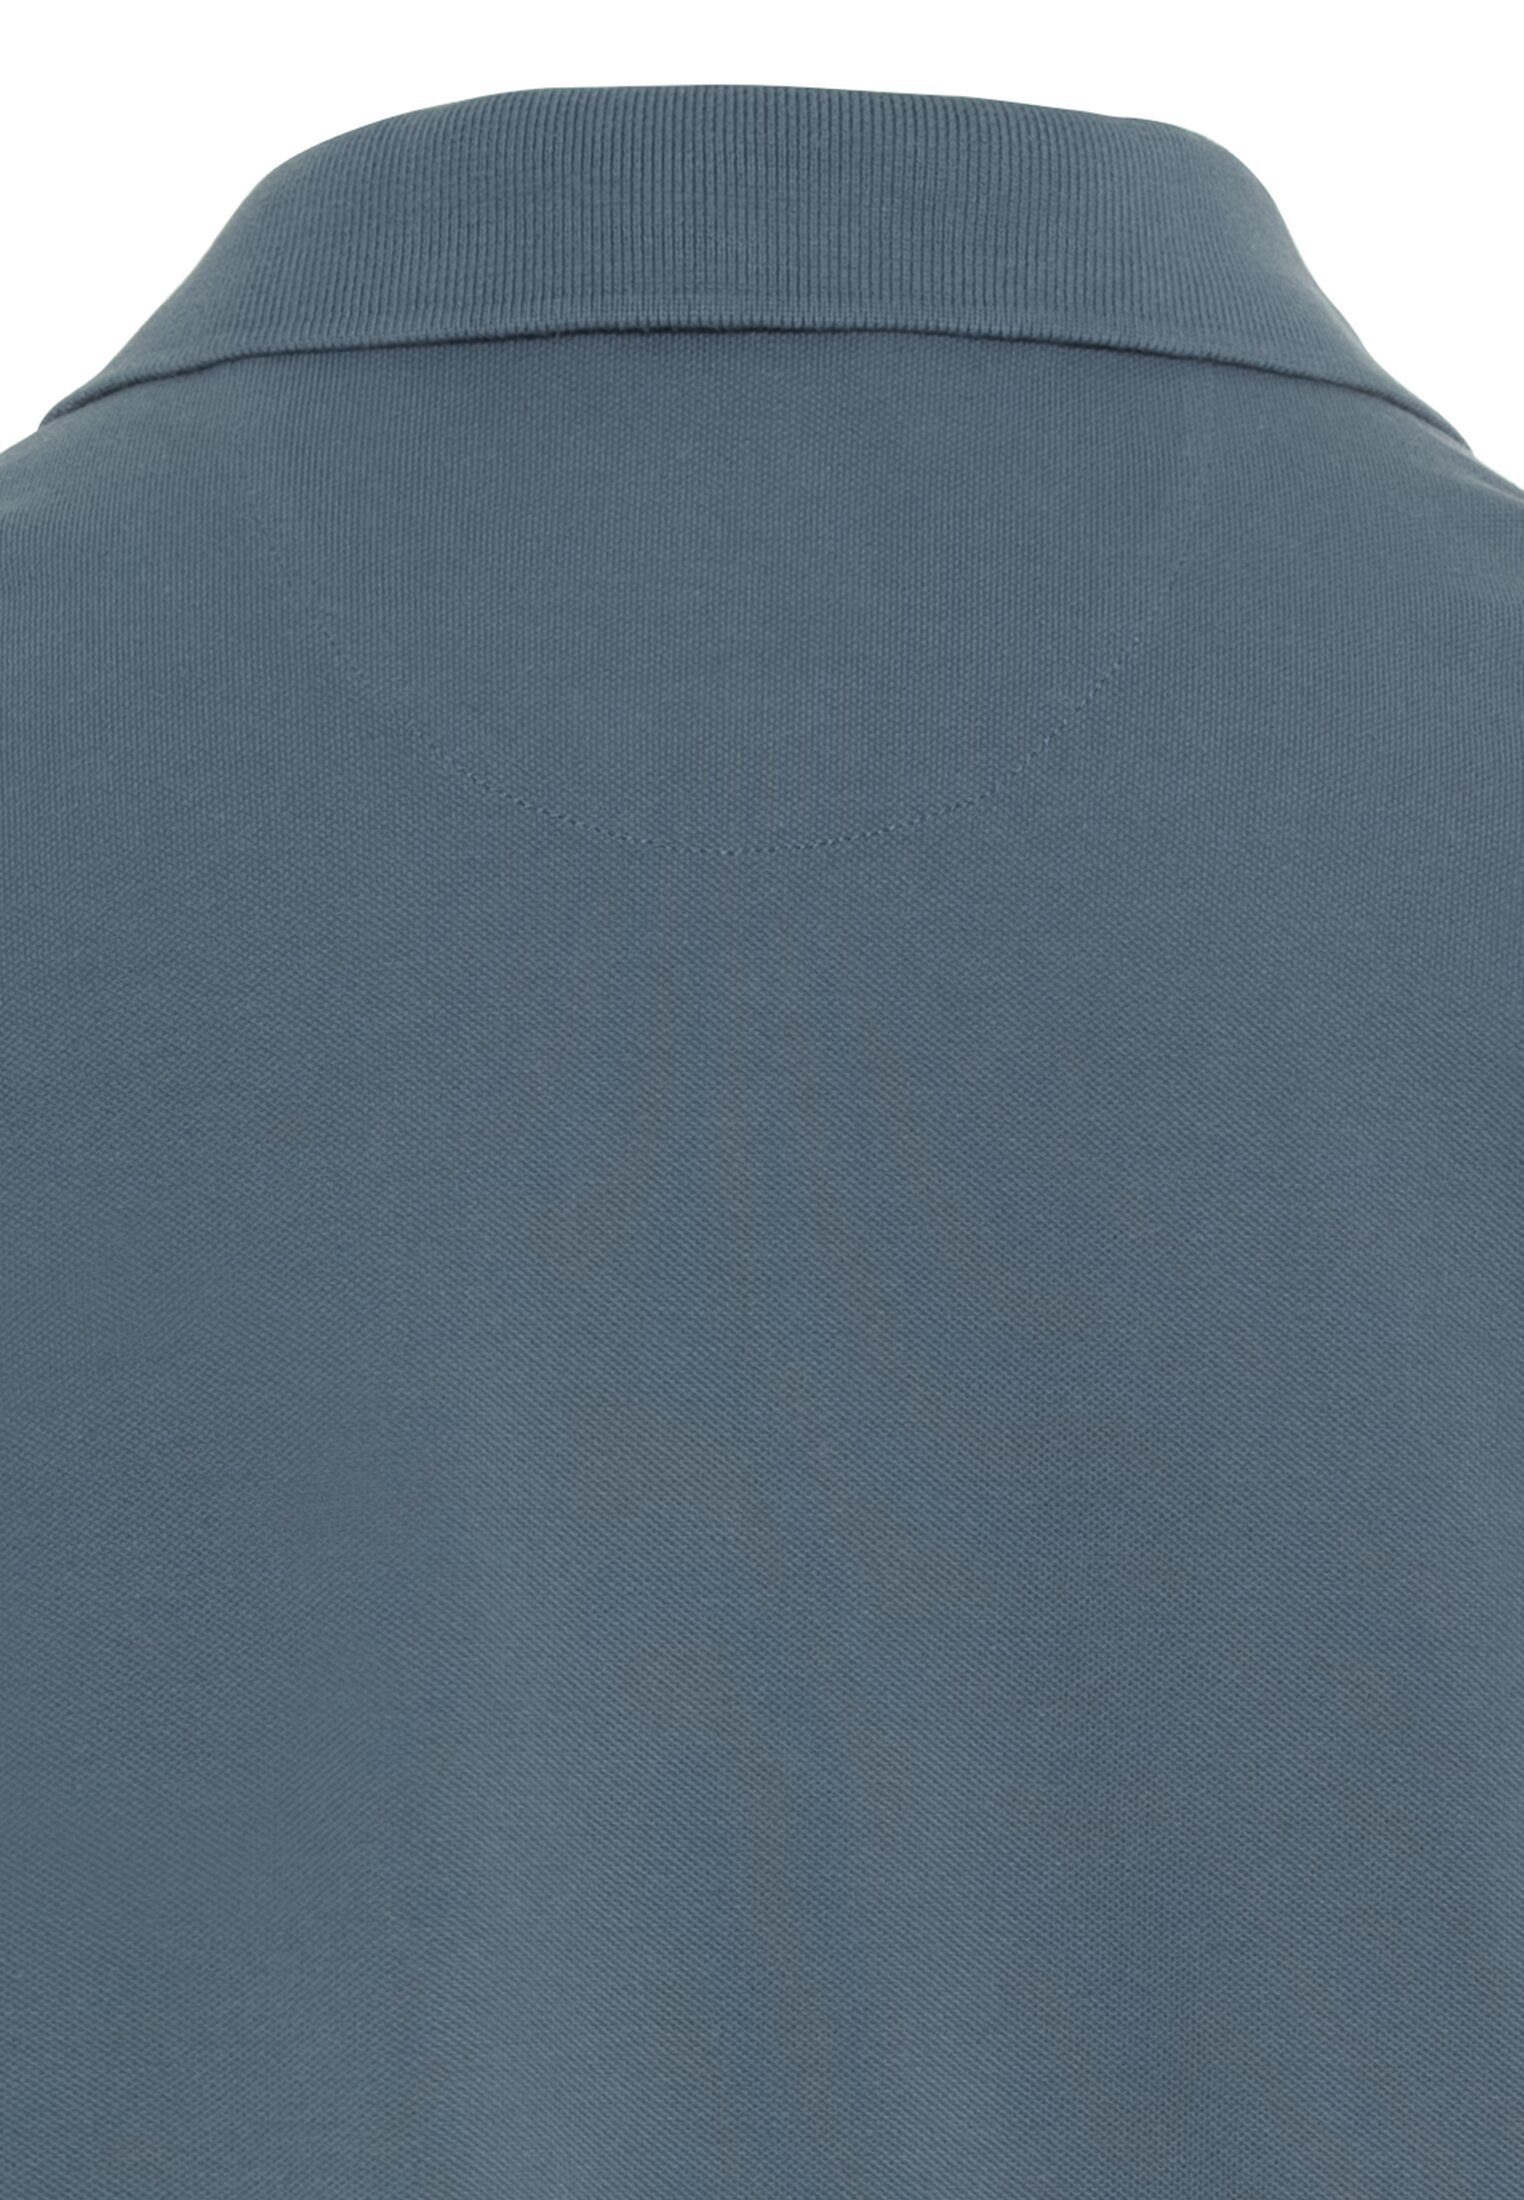 active camel Baumwolle Blau reiner Poloshirt Shirts_Poloshirt aus